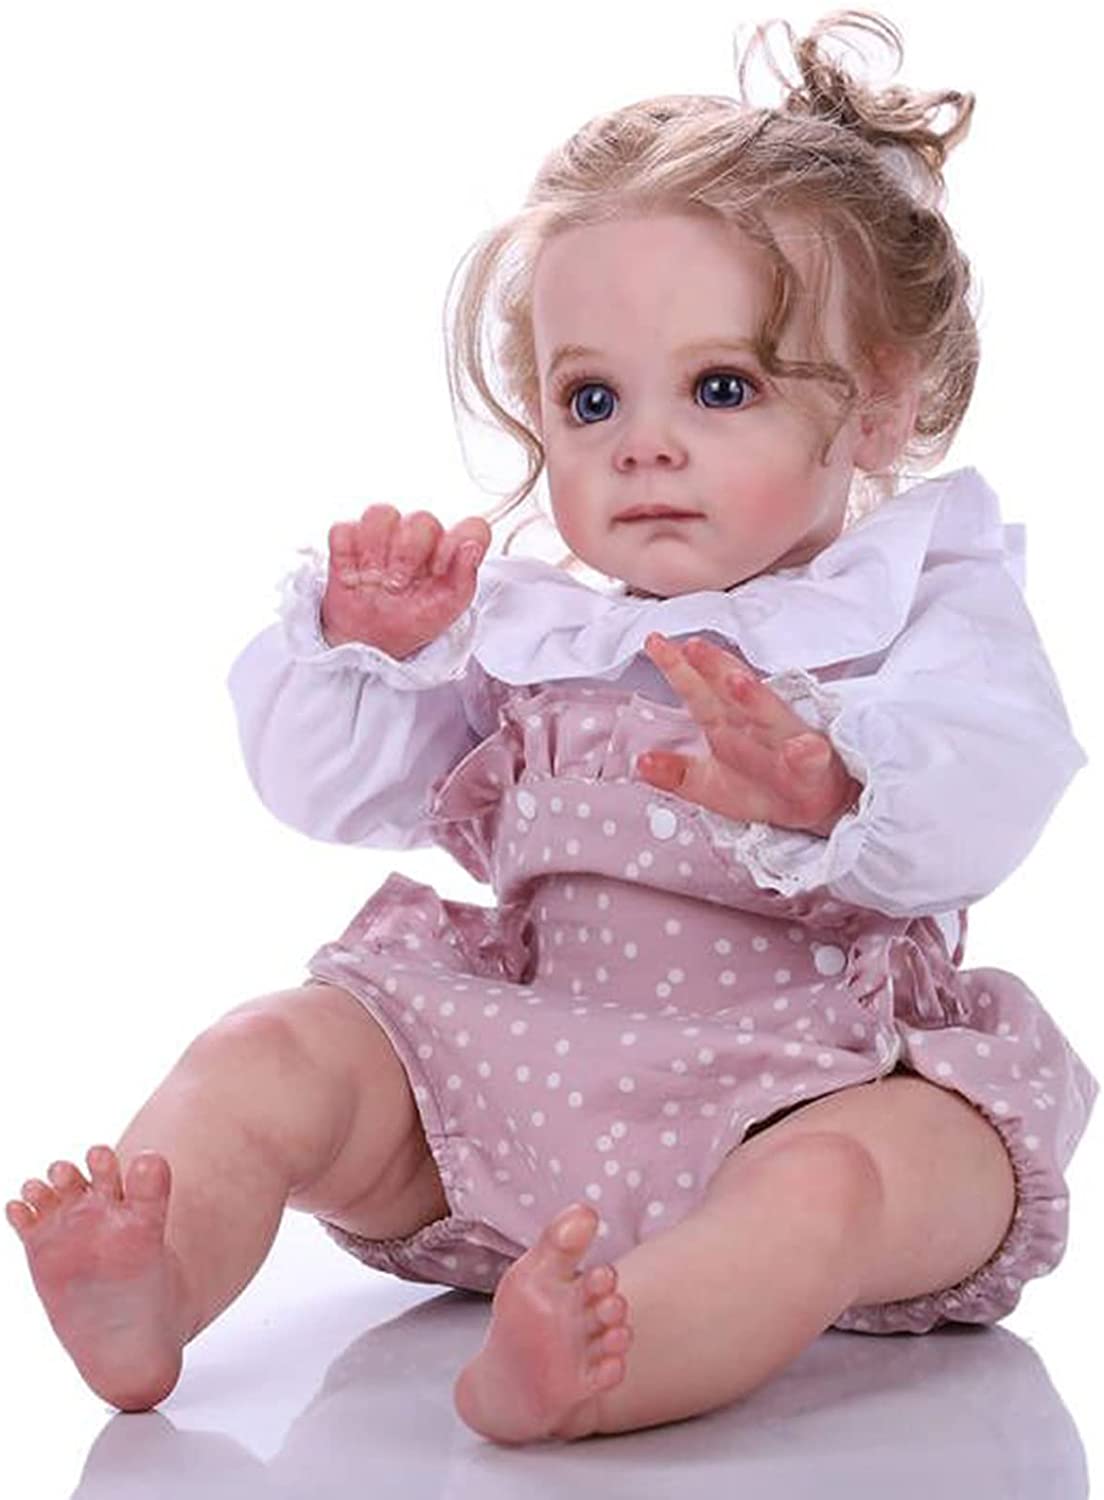 ZIYIUI Reborn Doll Baby Girl 24 Inch 60 cm Soft Silicone Vinyl Real Life Baby Dolls Newborn Girl Toy Doll That Look Real Handmade Child’s Vinyl Dolls Birthday Xmas Gift